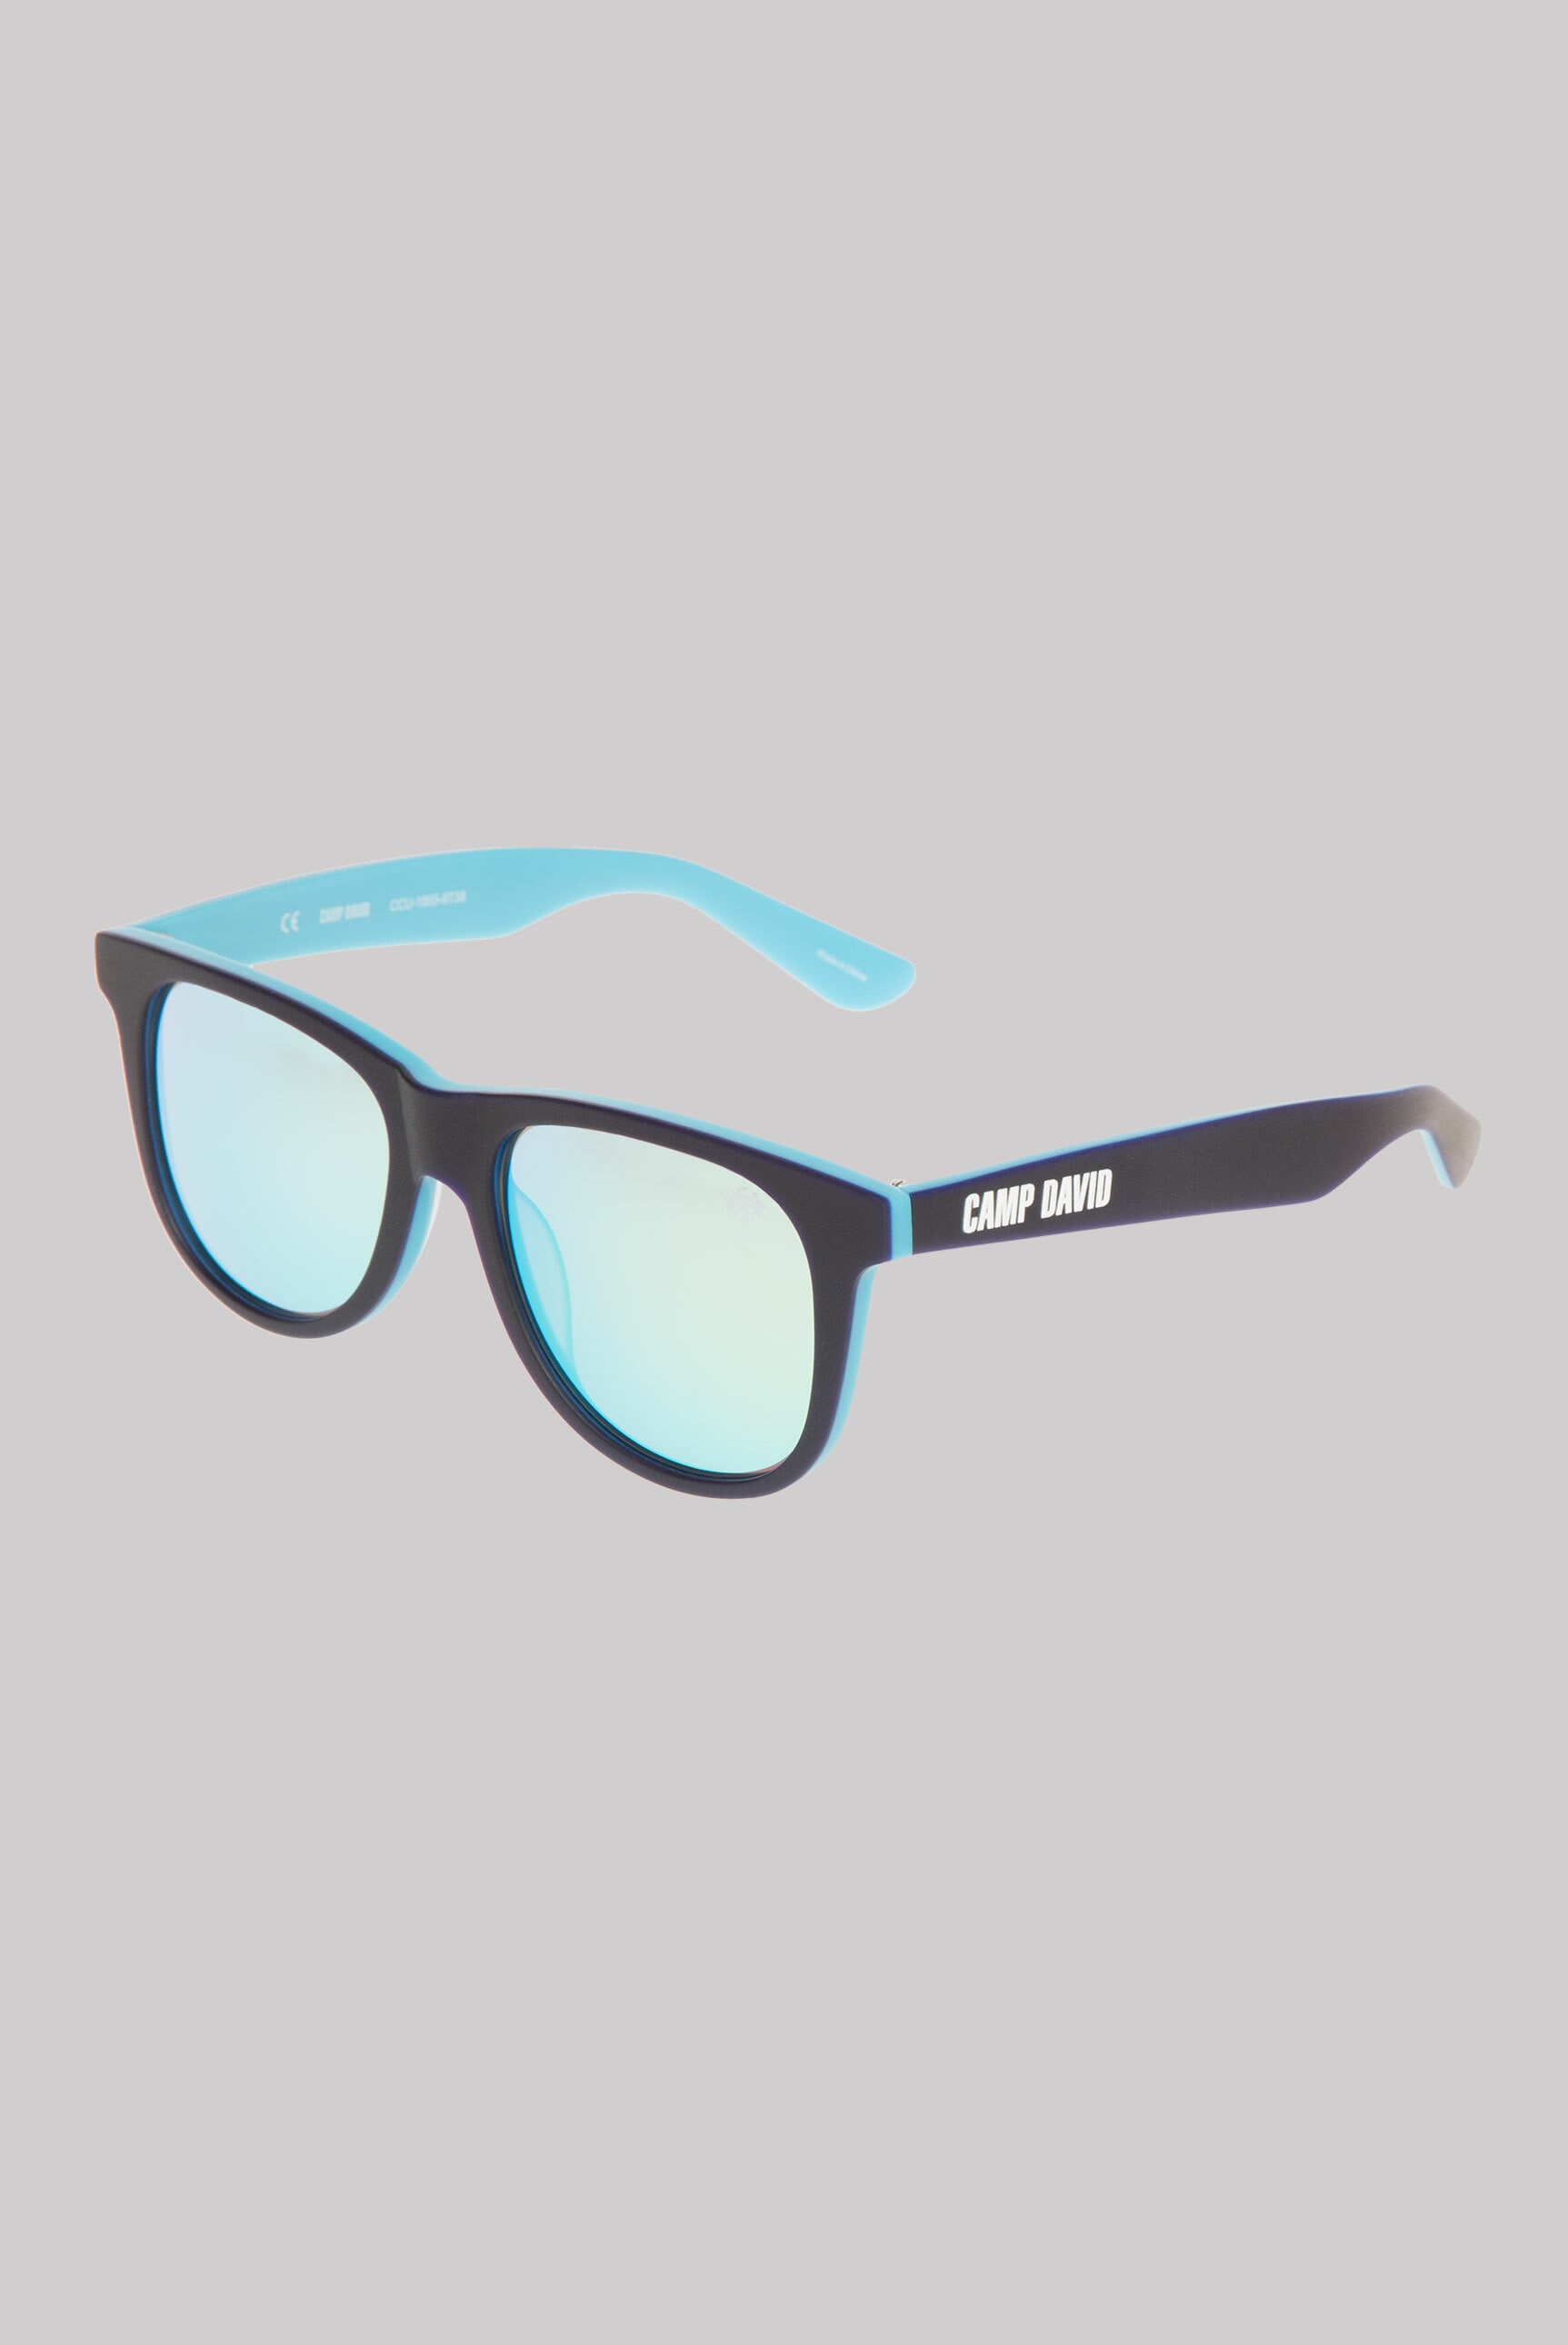 CAMP DAVID Sonnenbrille, (ca. 17 x 15 cm), Print blau Damen Sonnenbrille Sonnenbrillen Accessoires